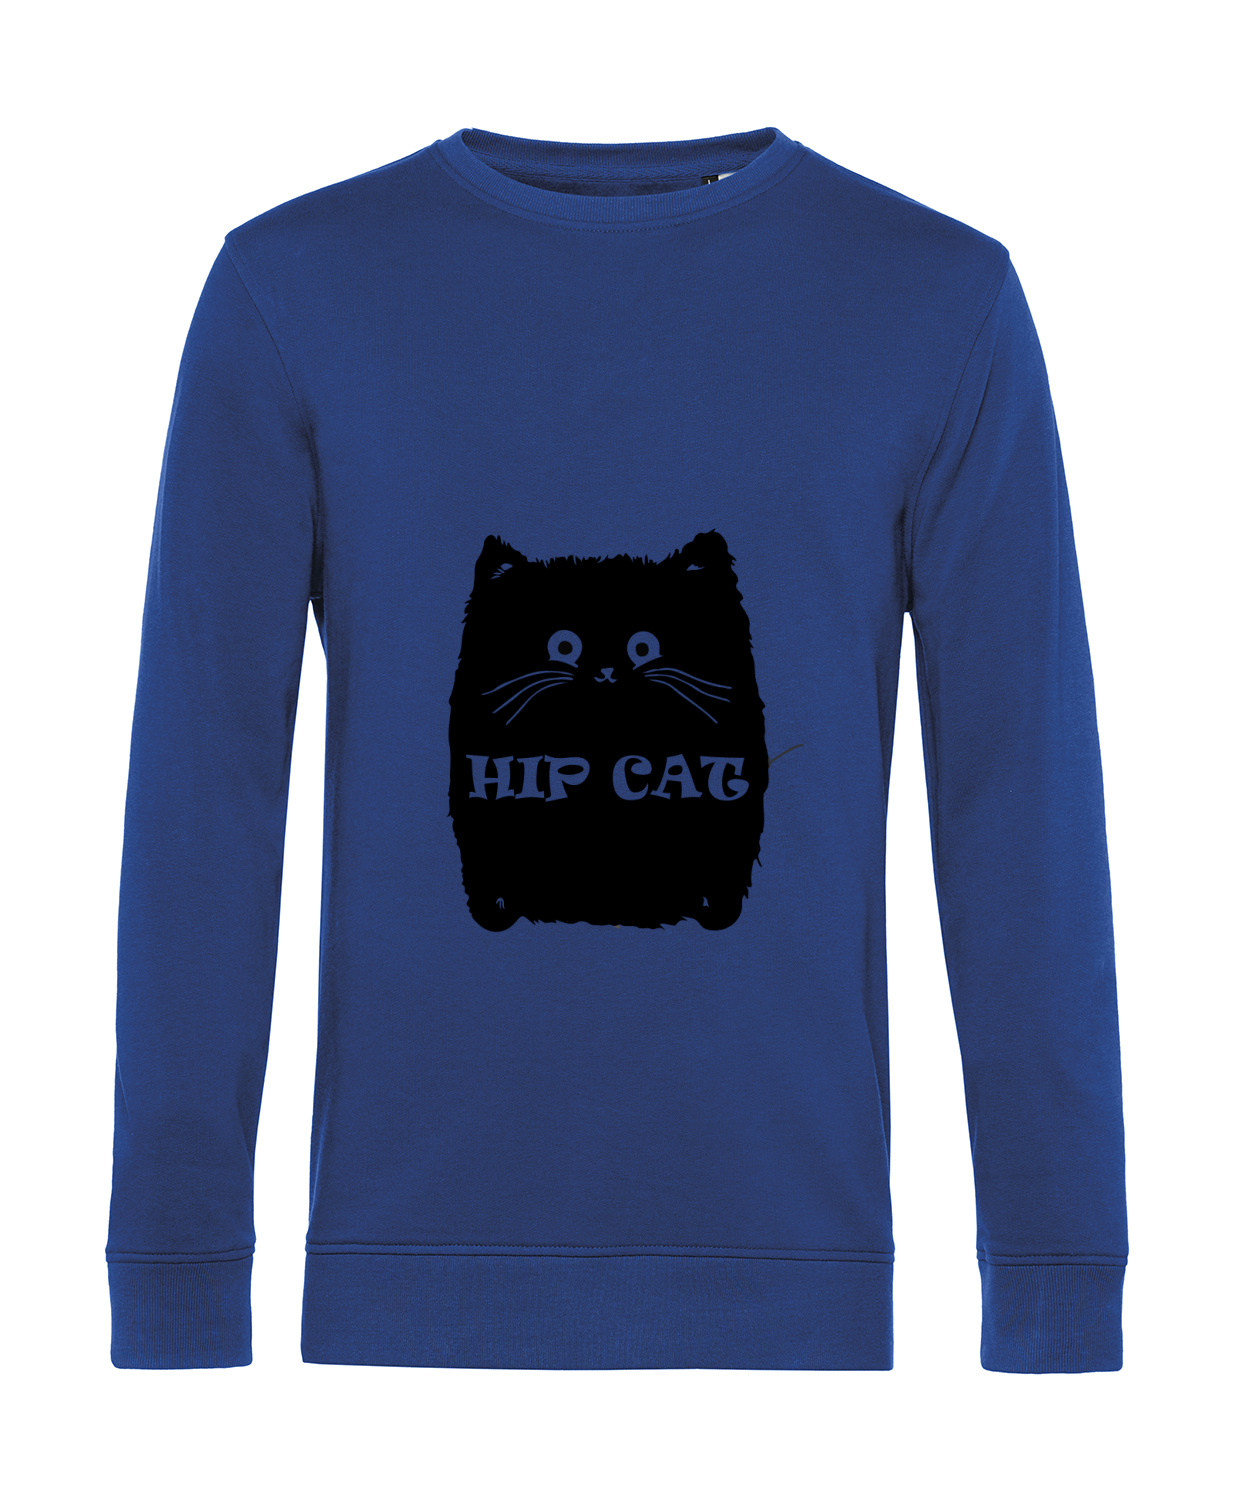 Nachhaltiges Sweatshirt Herren Katzen - Hip Cat